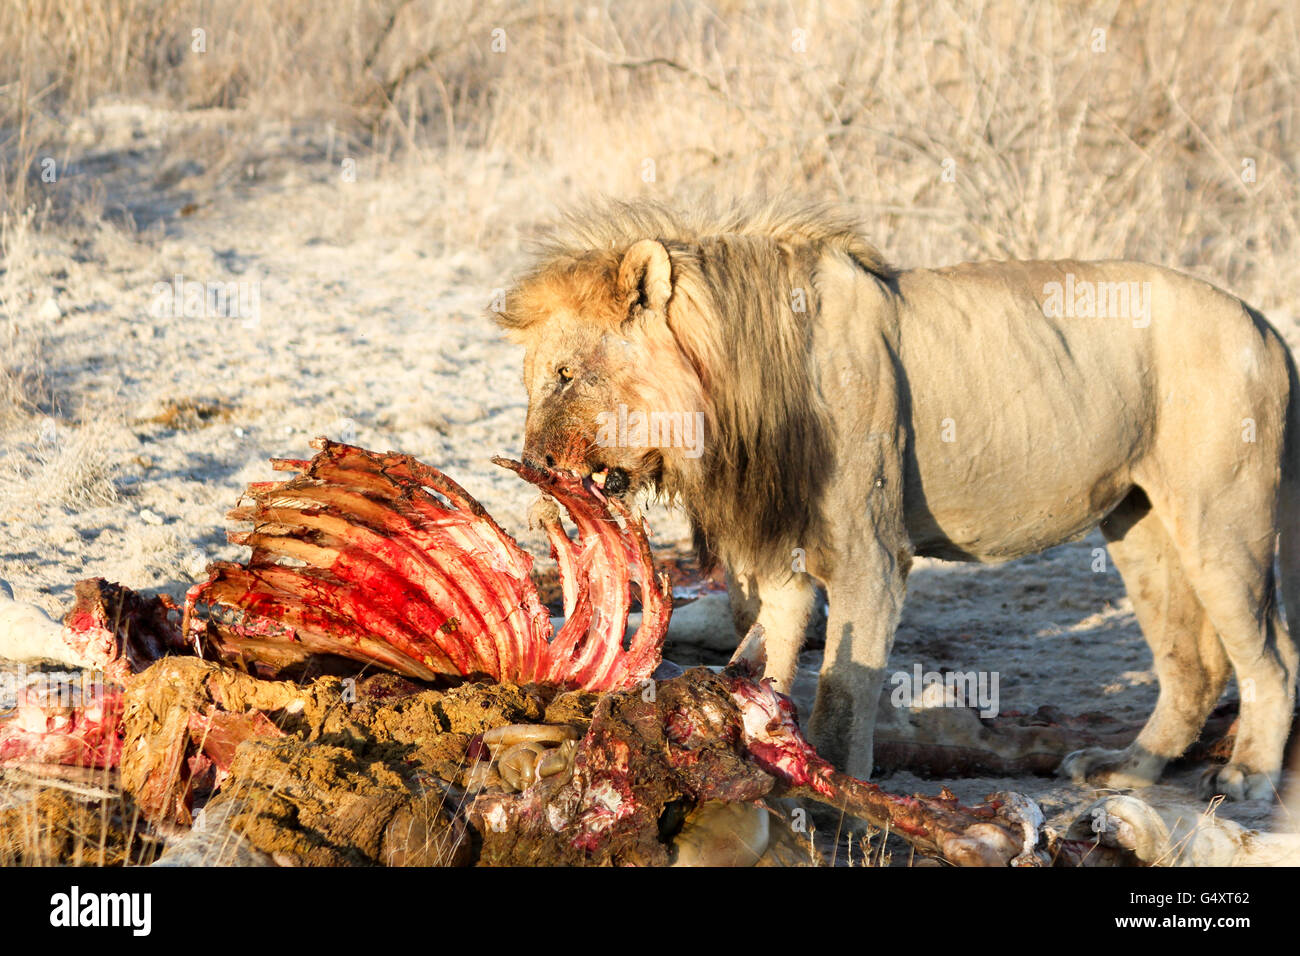 Namibia, Oshikoto, Etosha National Park, Old lion eating from dead giraffe, lion at giraffe cadaver Stock Photo